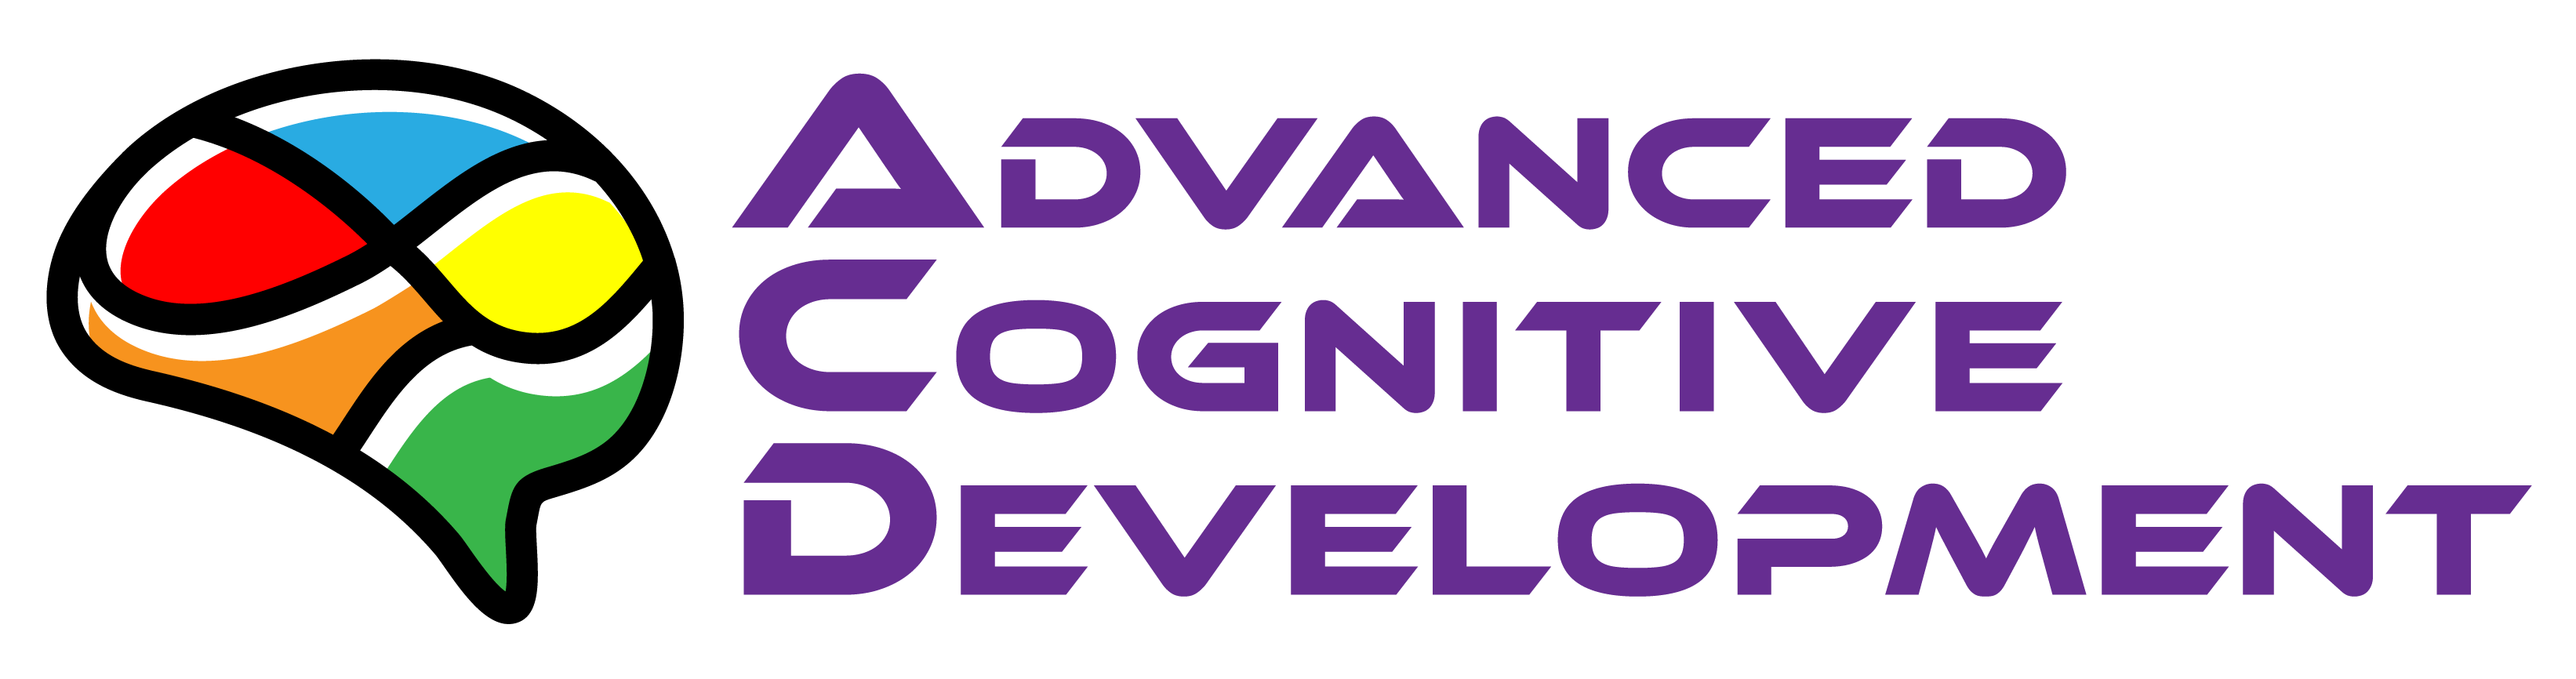 Advanced Cognitive Development